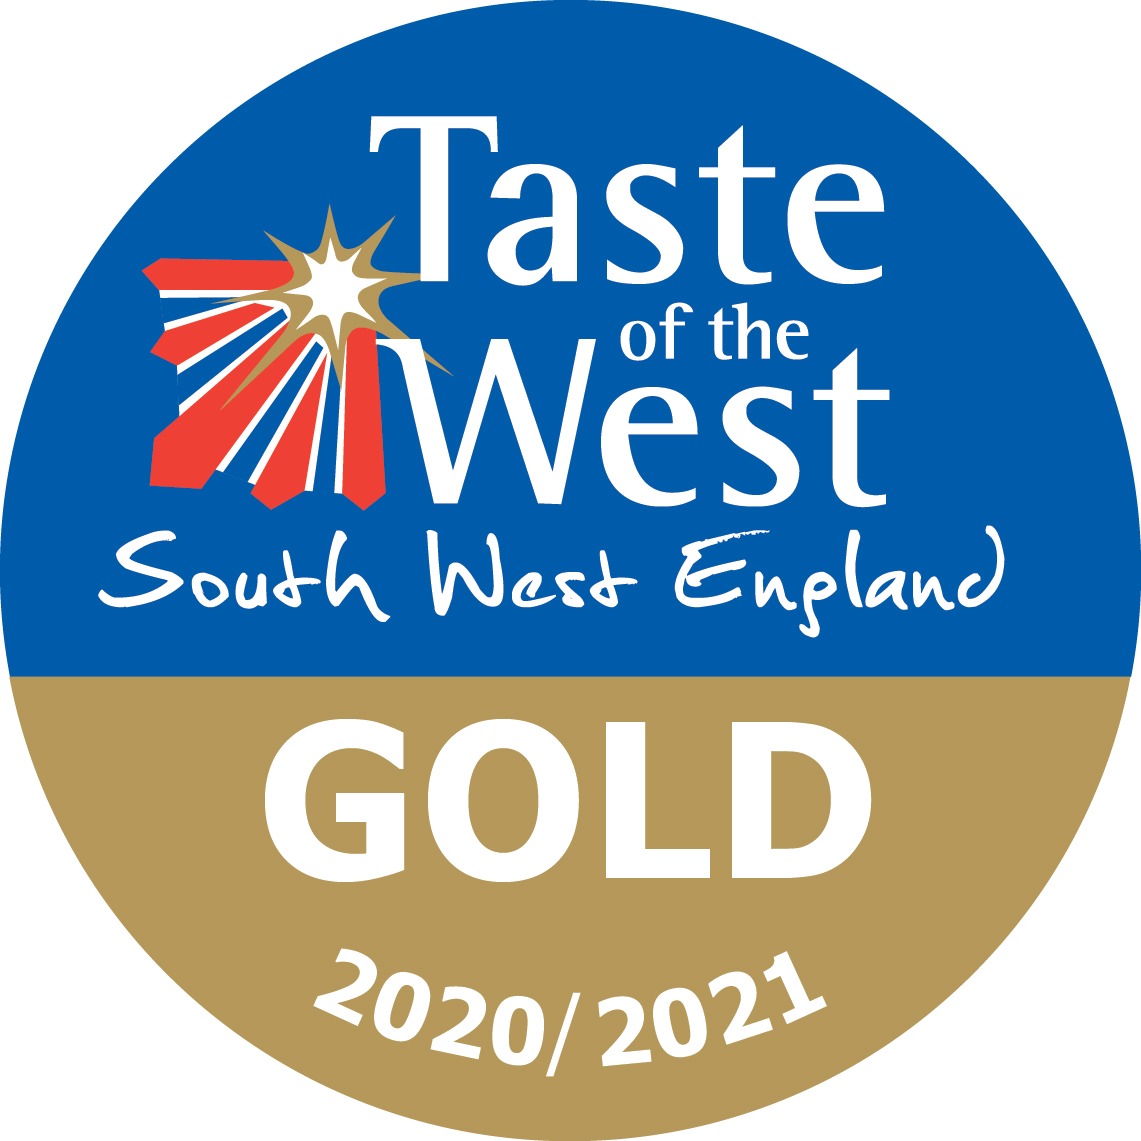 Taste of the West Gold Award